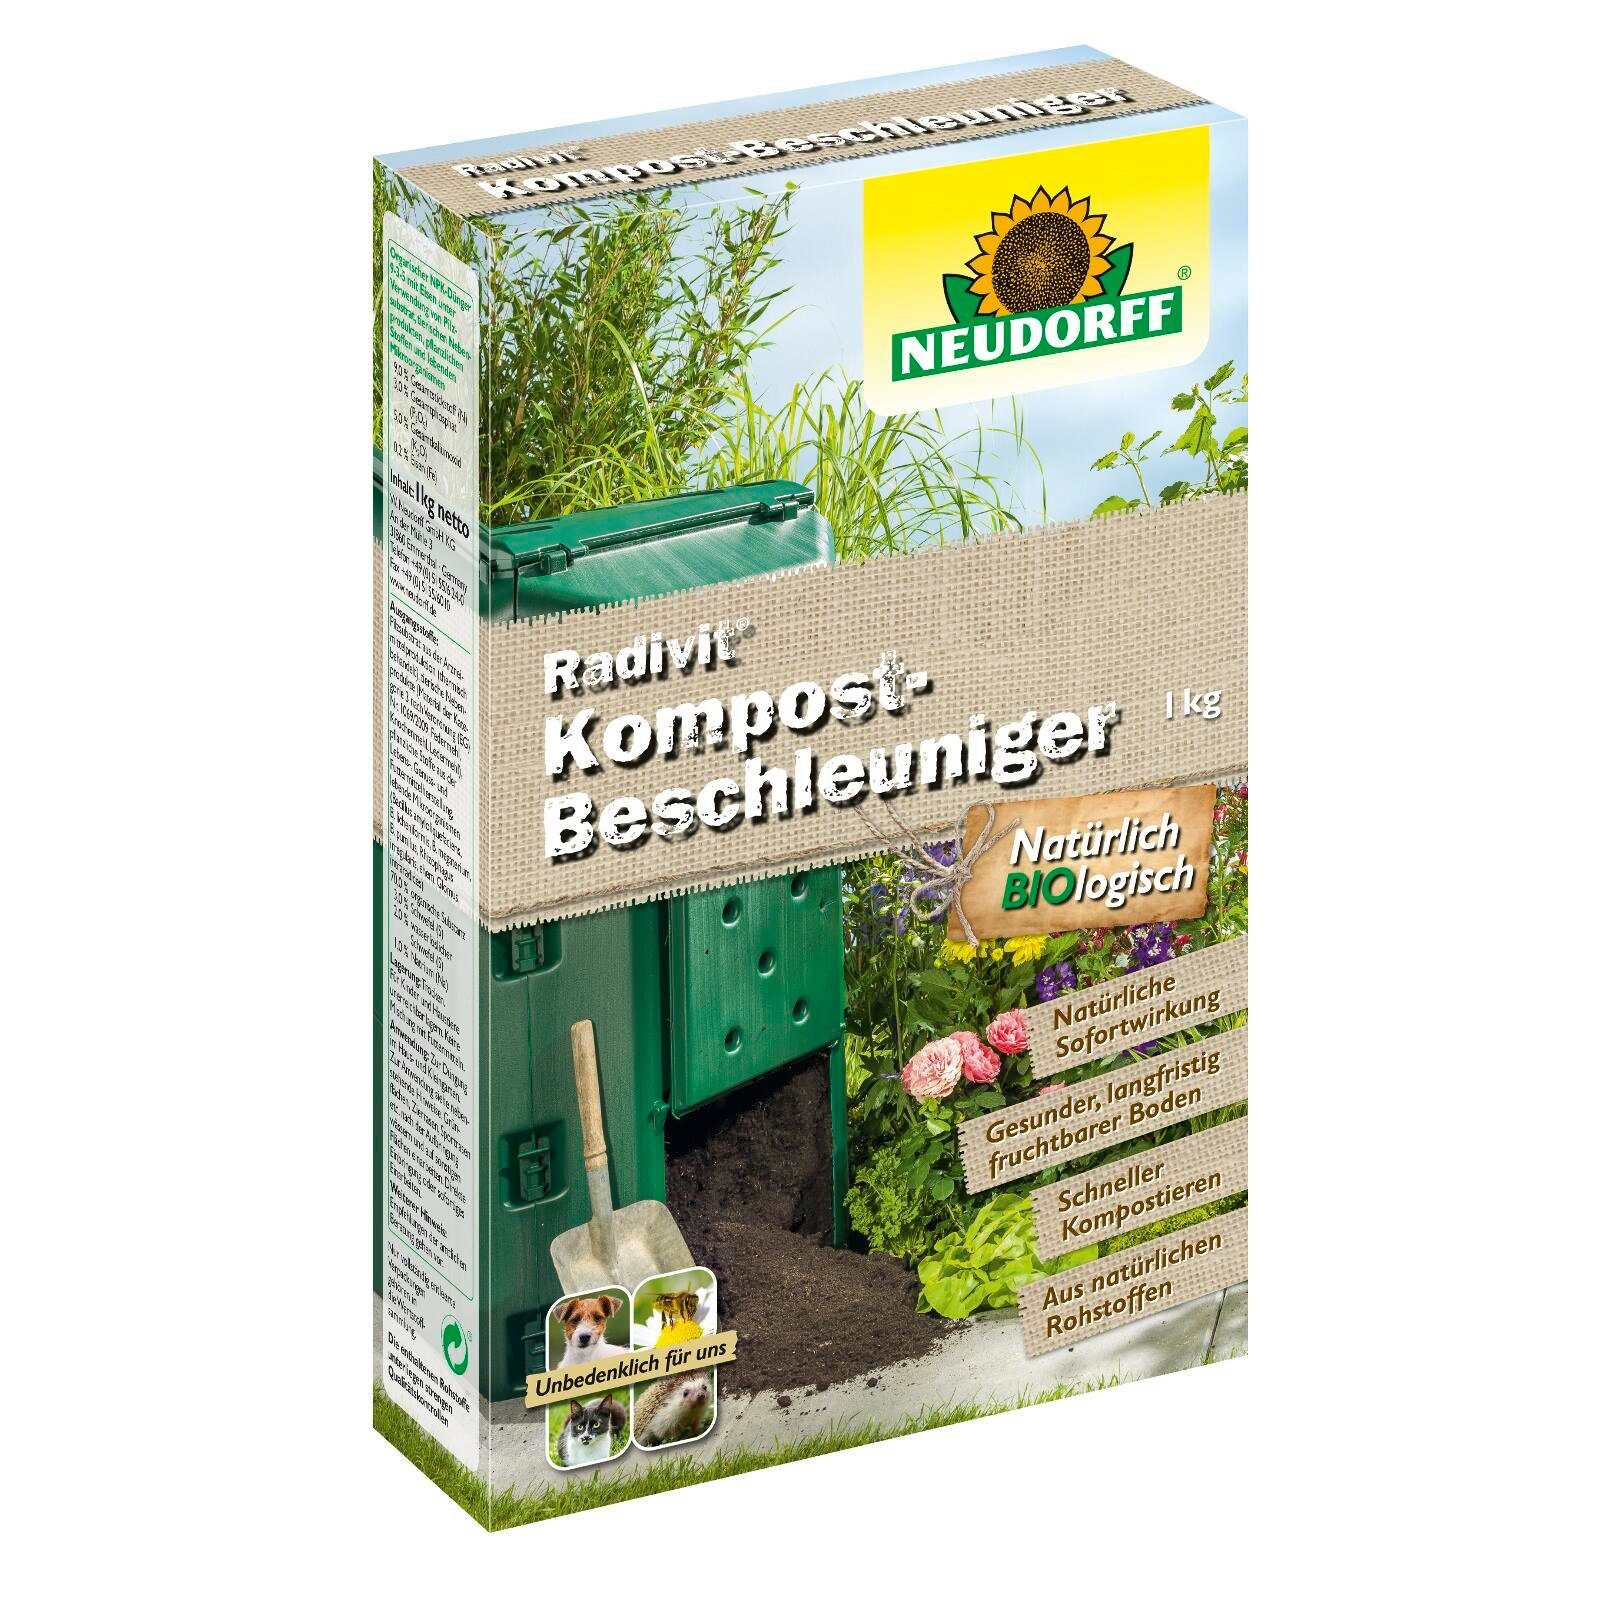 kg Thermokomposter Neudorff Neudorff Kompost-Beschleuniger Radivit 1 -